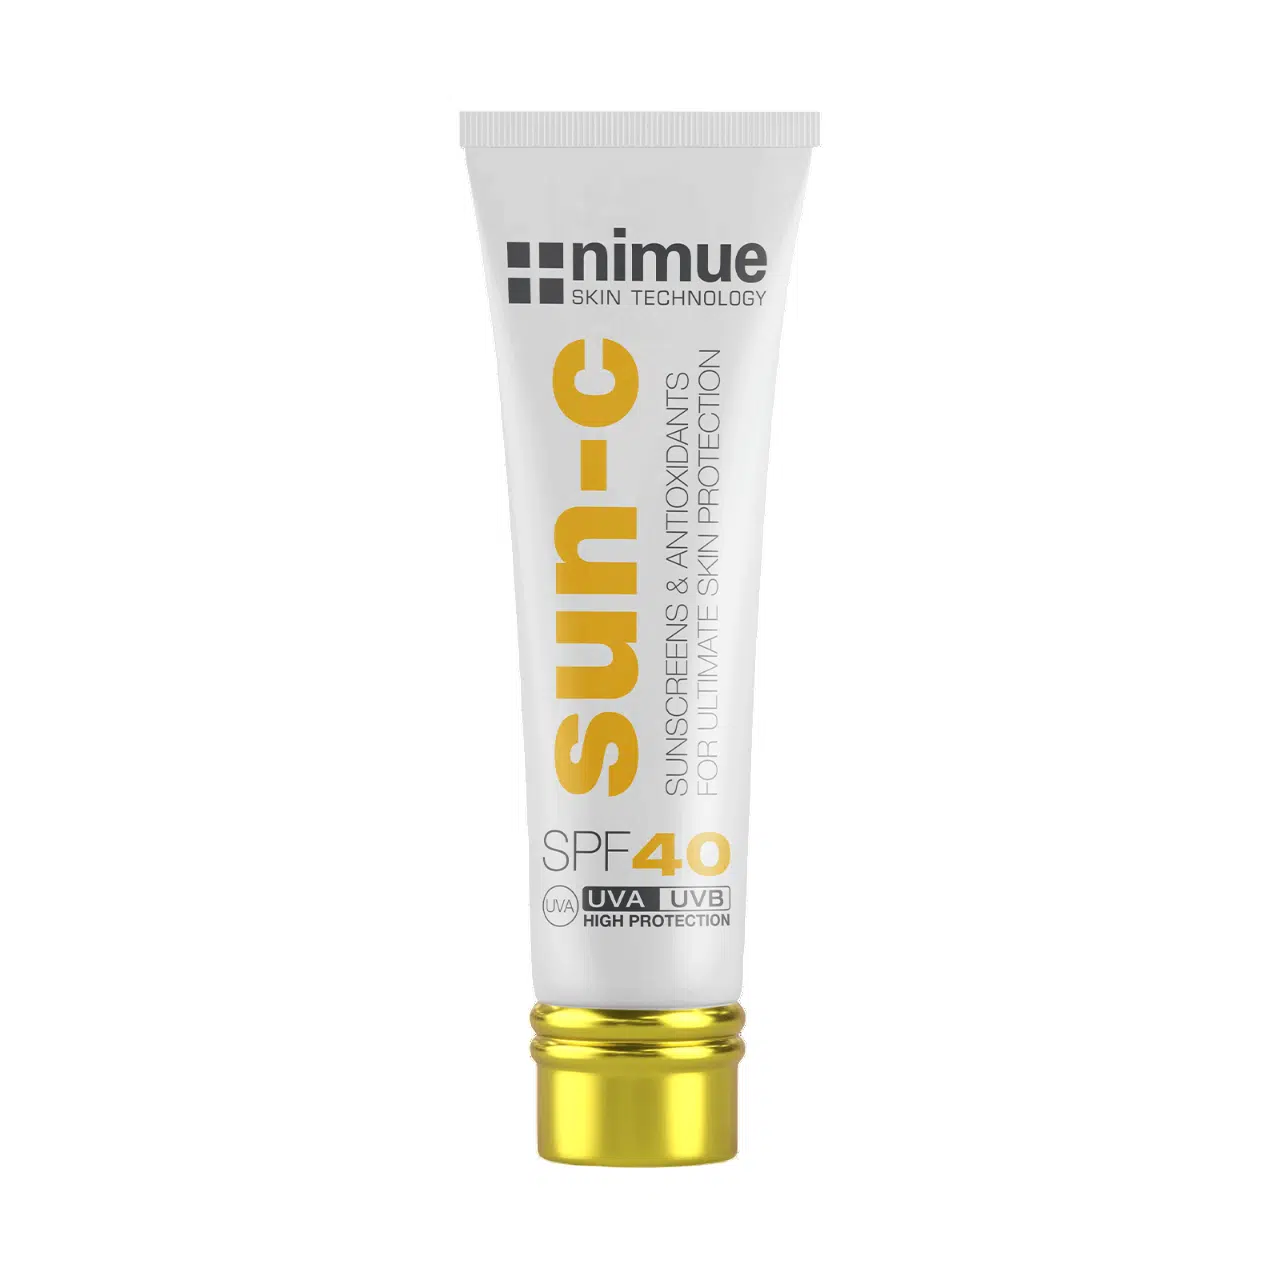 Nimue - Sun-C SPF 40 60ml provides protection against harmful sun rays.